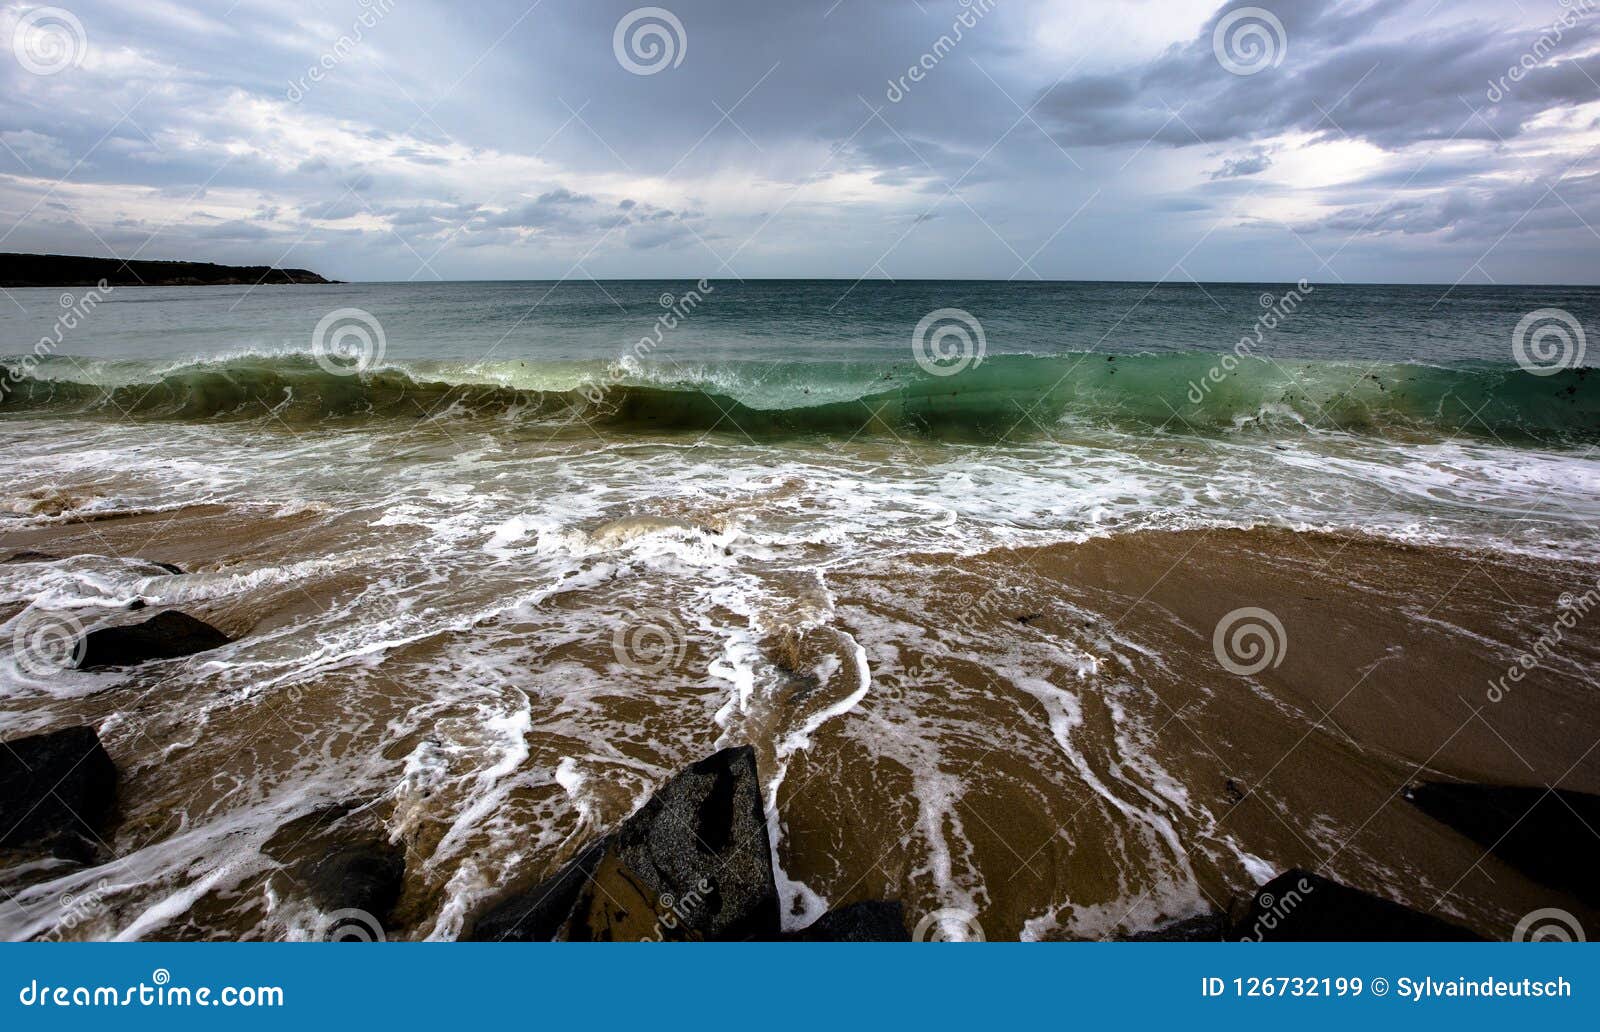 Atlantic Ocean Before The Storm Stock Image - Image of happy, rainy: 126732199